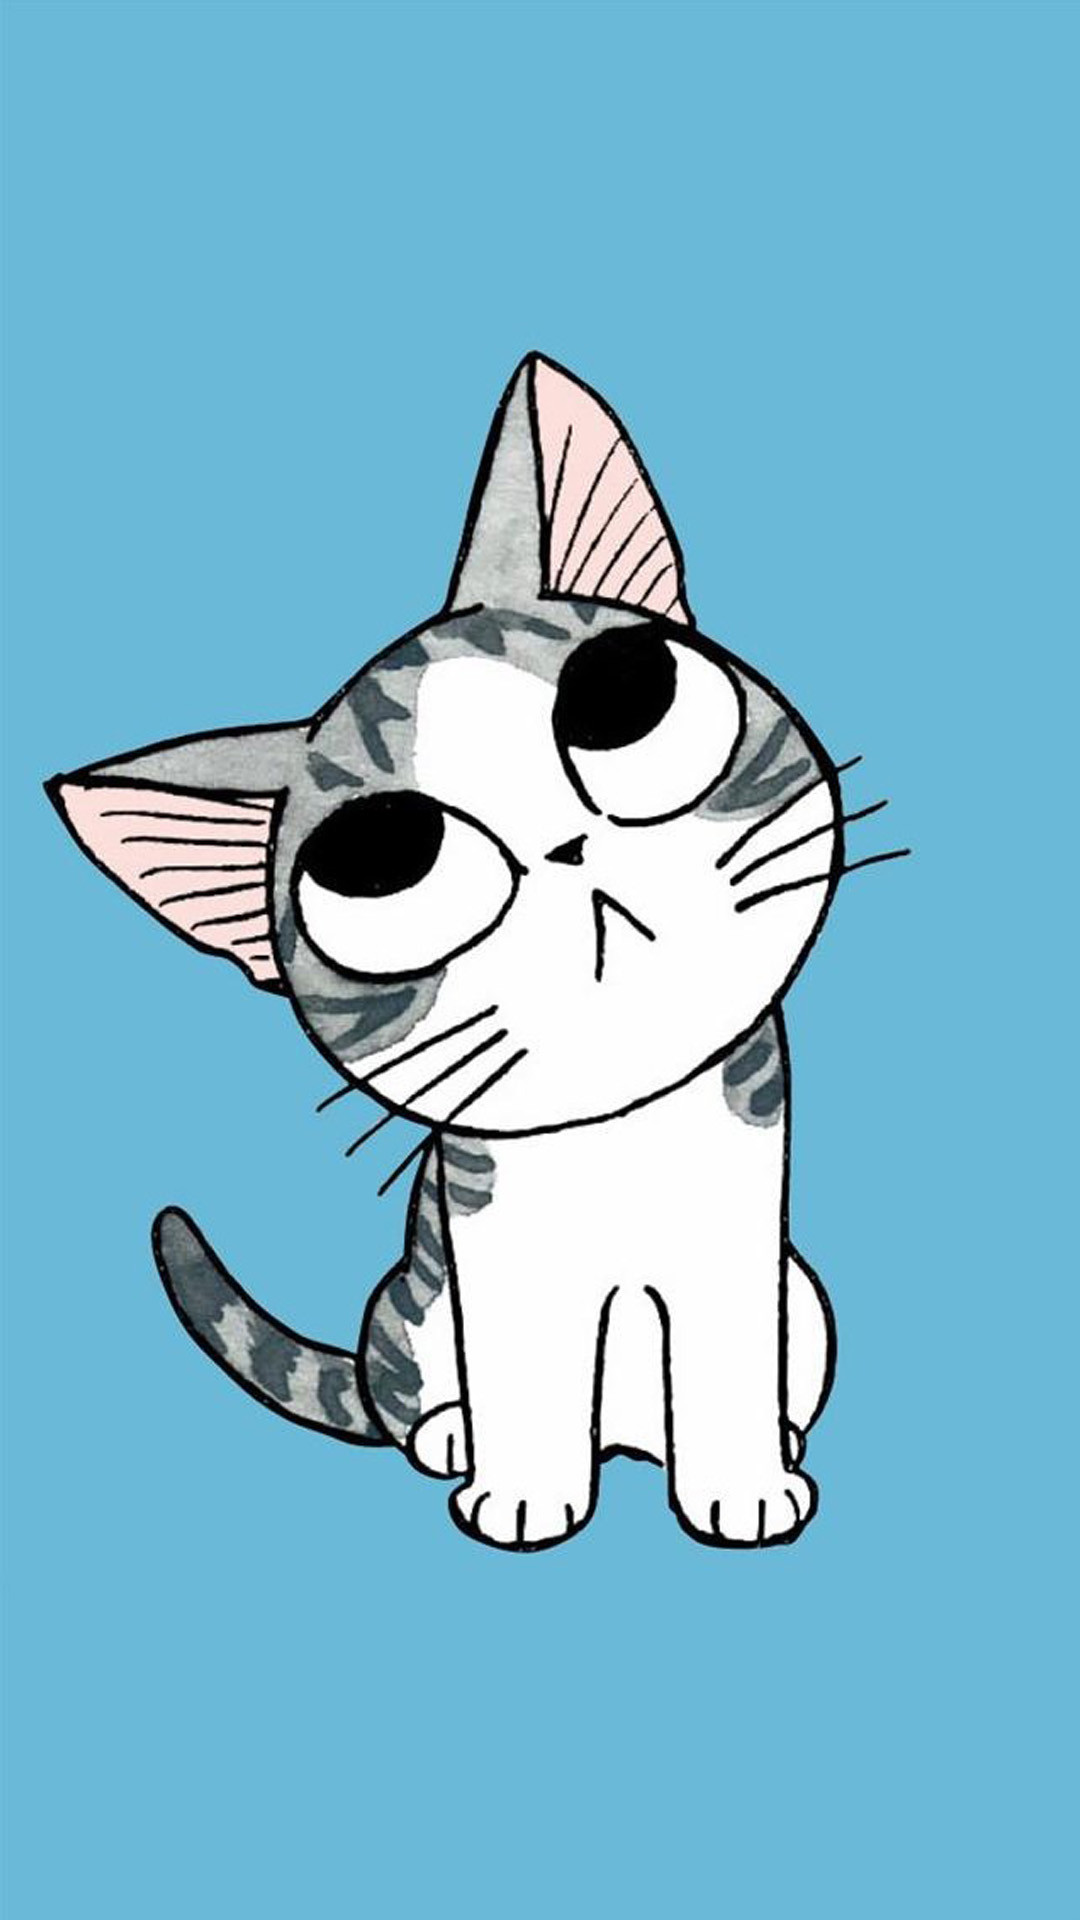 1080x1920 Photos Of Cute Cartoon Kitten Iphone Wallpaper Hd Images Mobile Phones